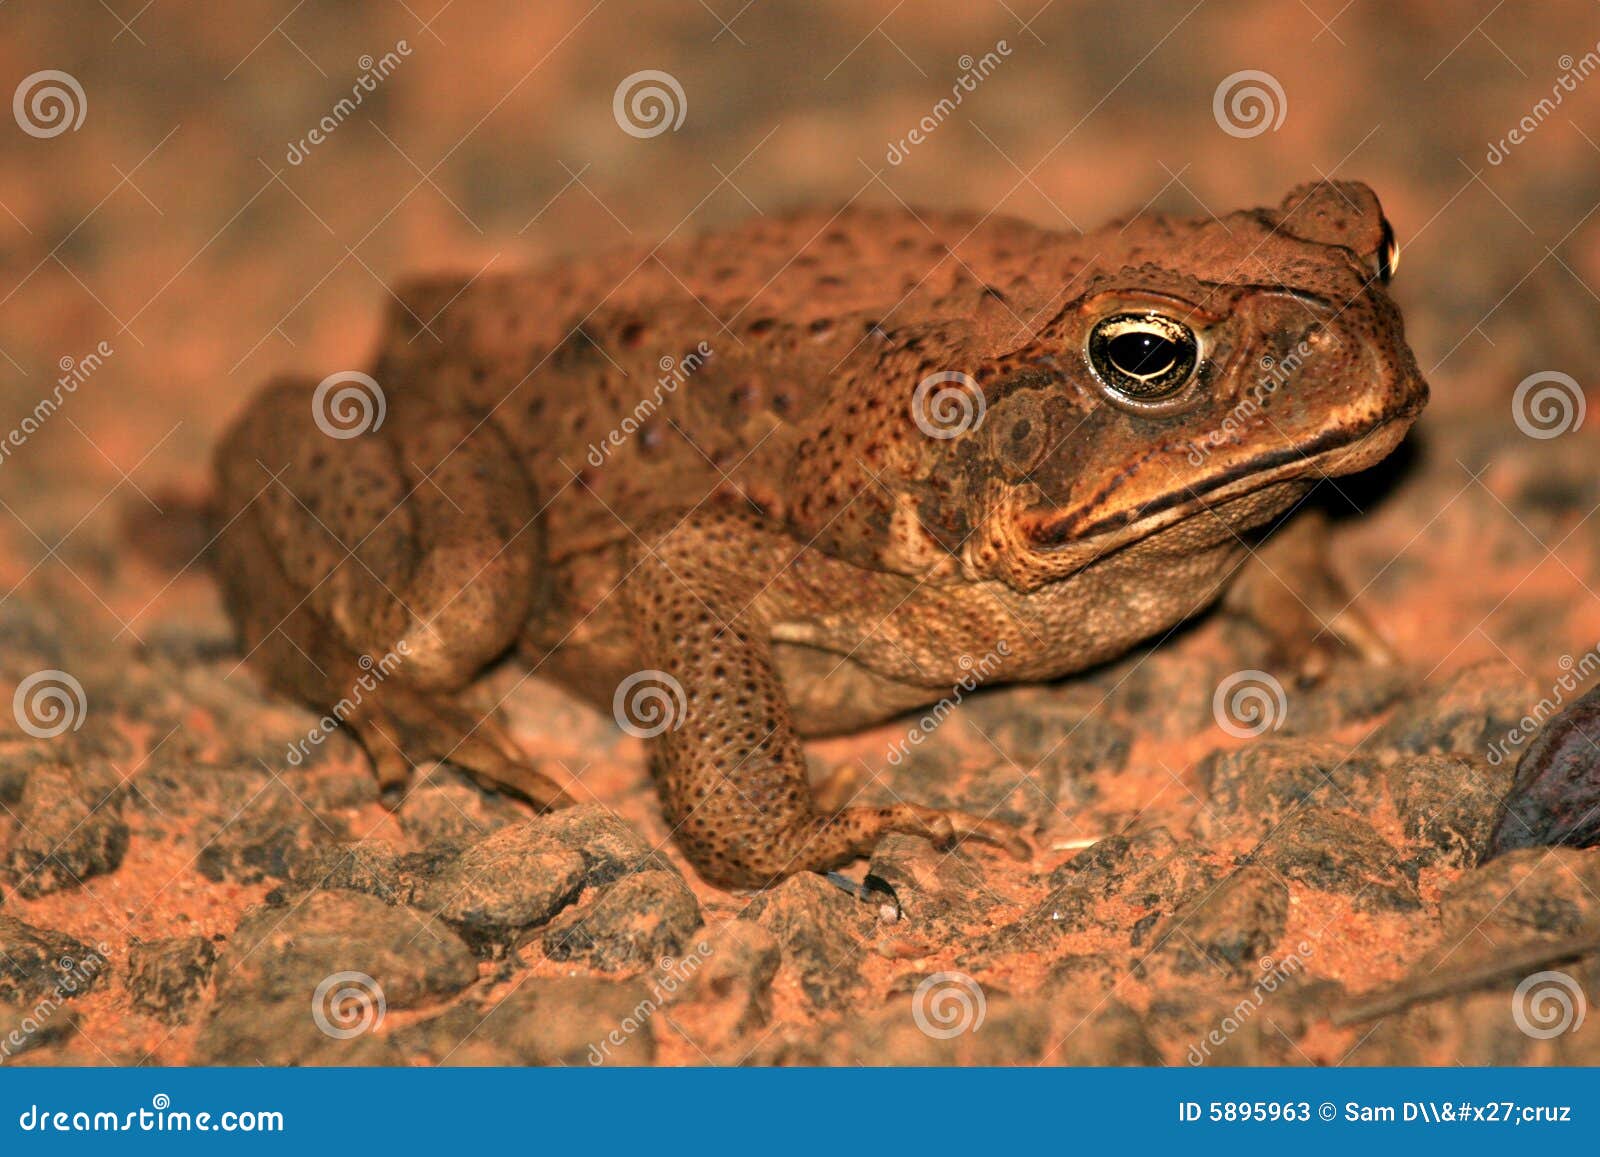 cane toad - australia